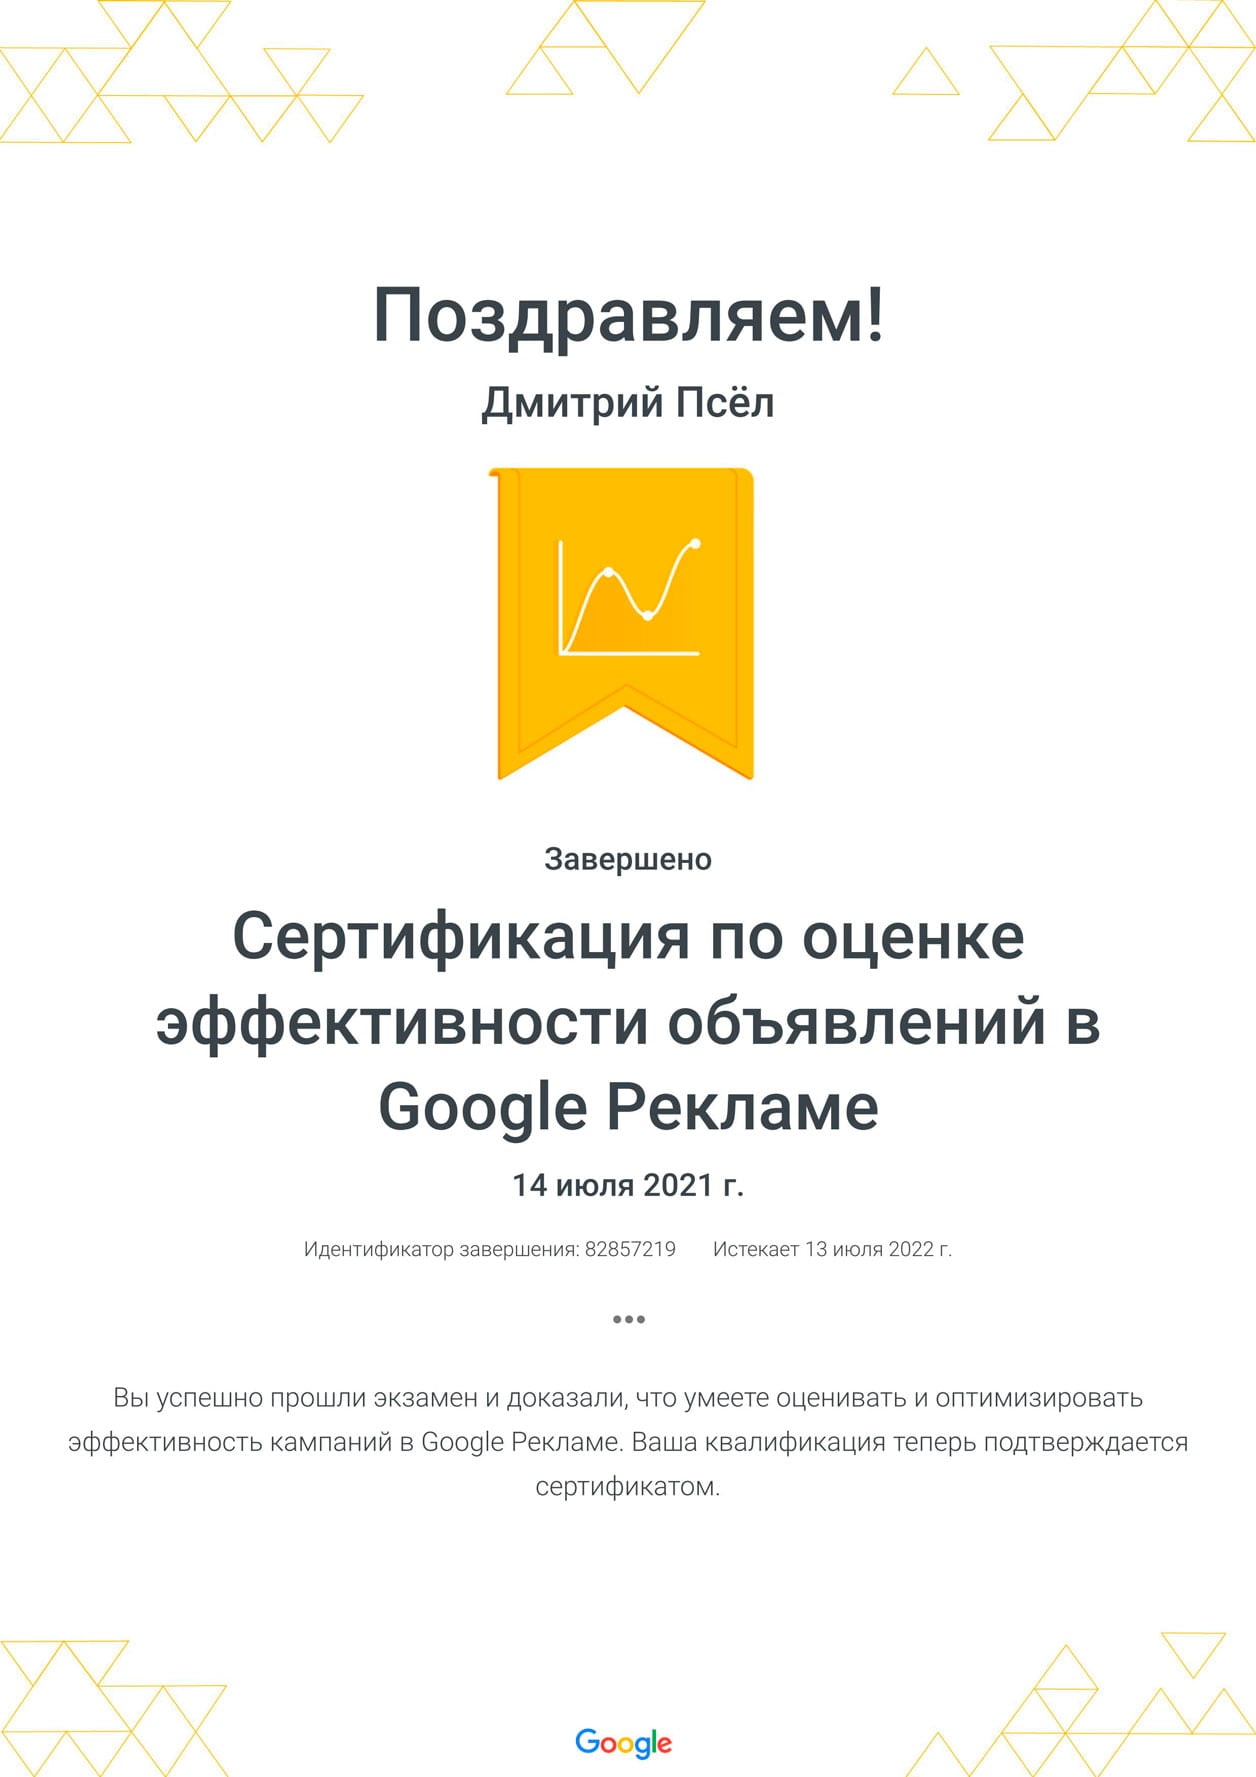 Дмитрий Псёл - сертификат по оценке эффективности объявлений в Google Рекламе